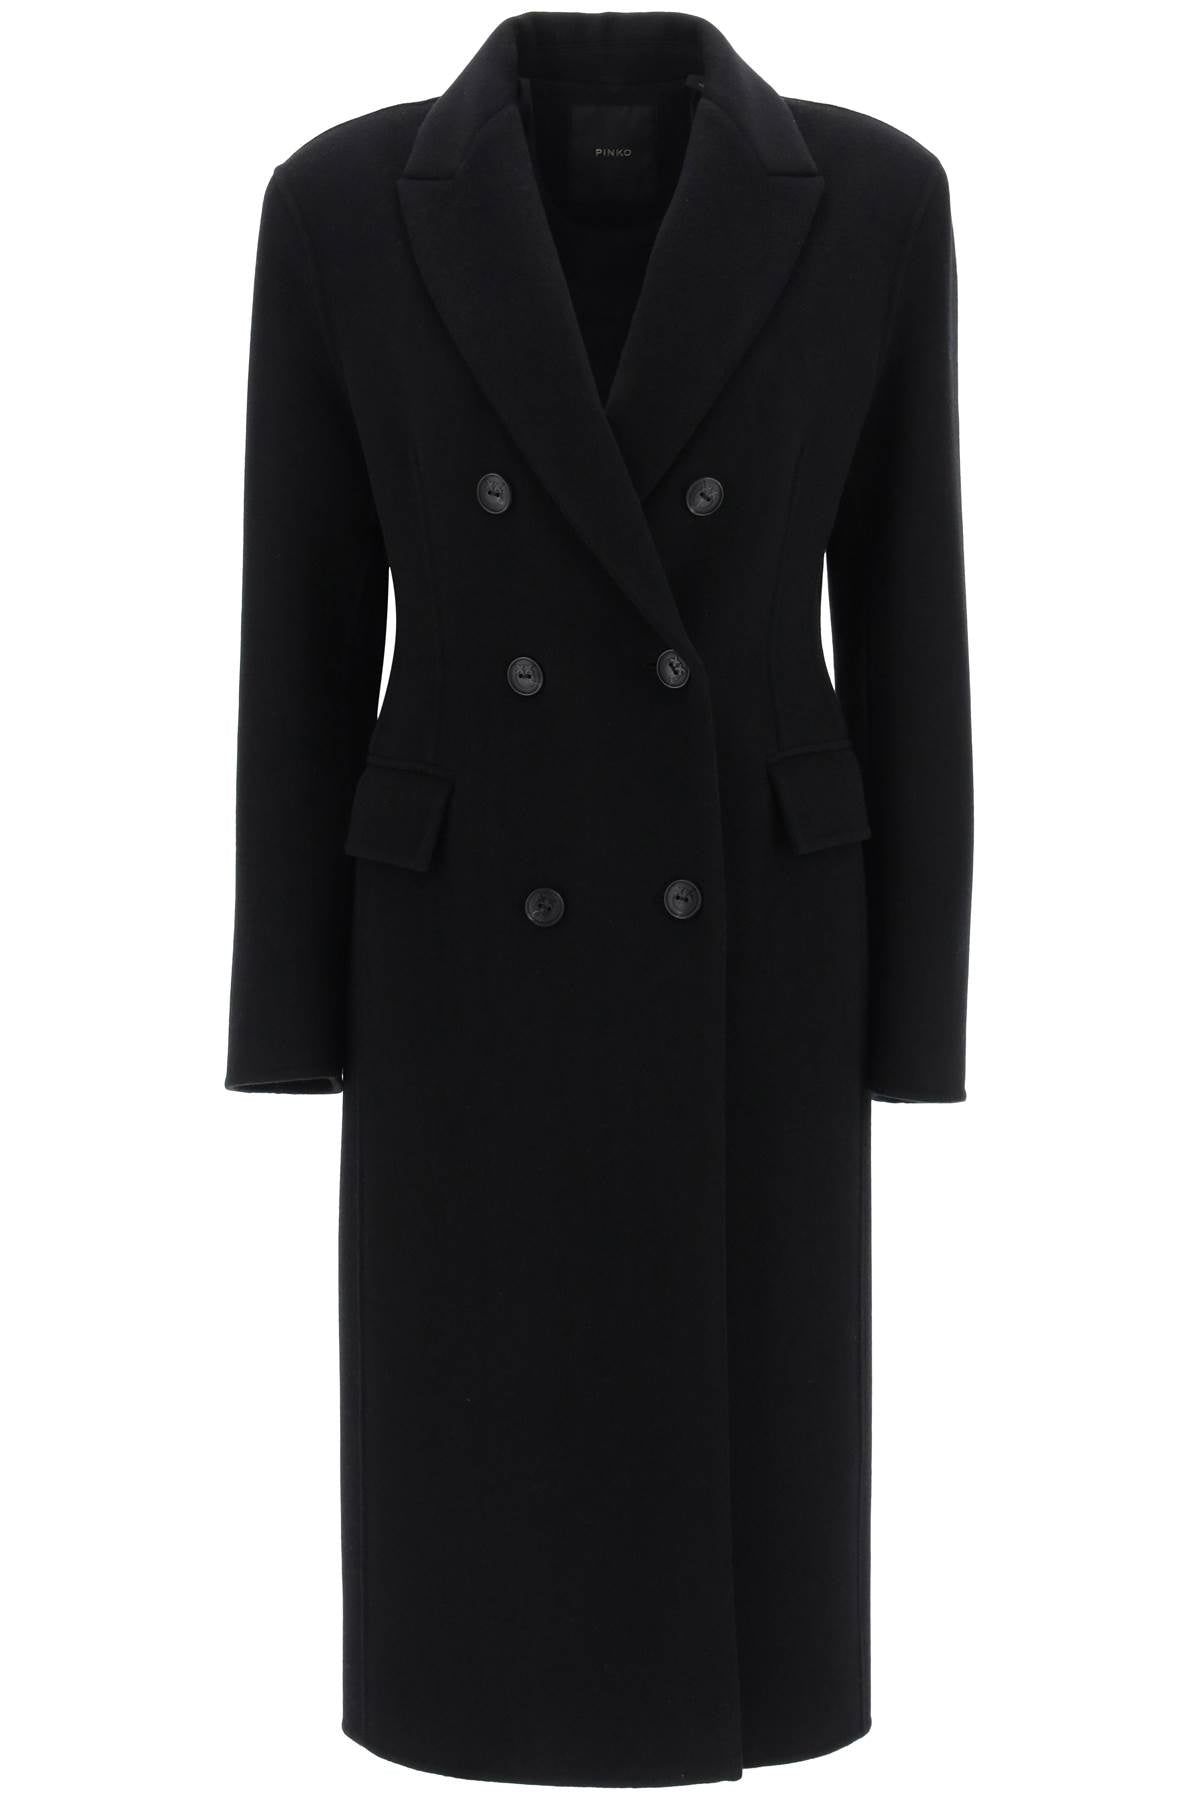 PINKO Stylish Black Wool Jacket for Women